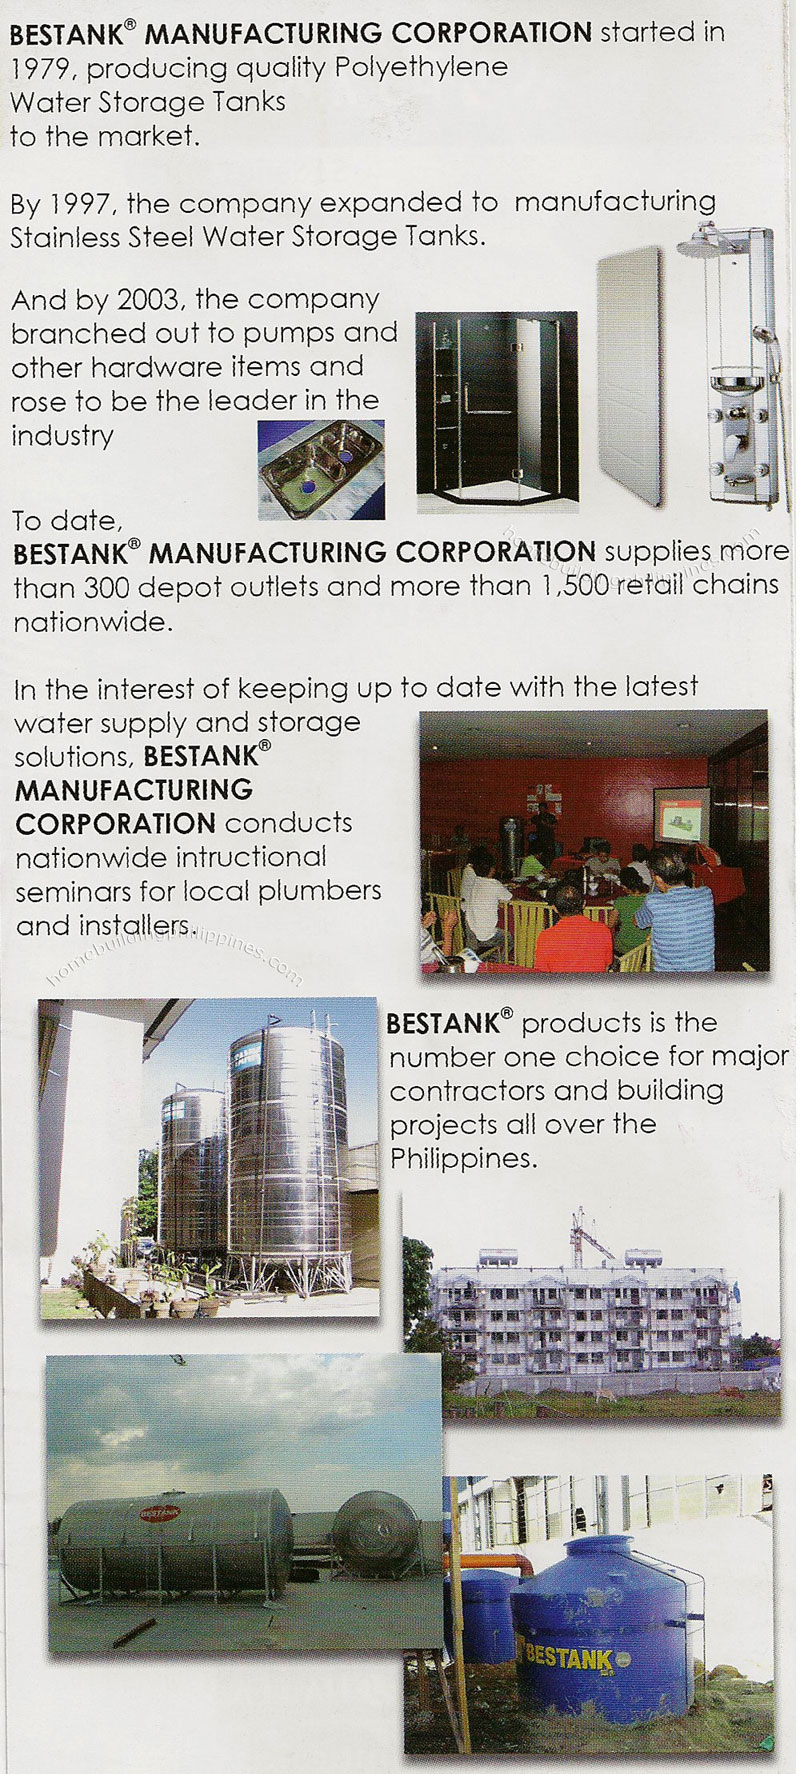 Bestank Company Information